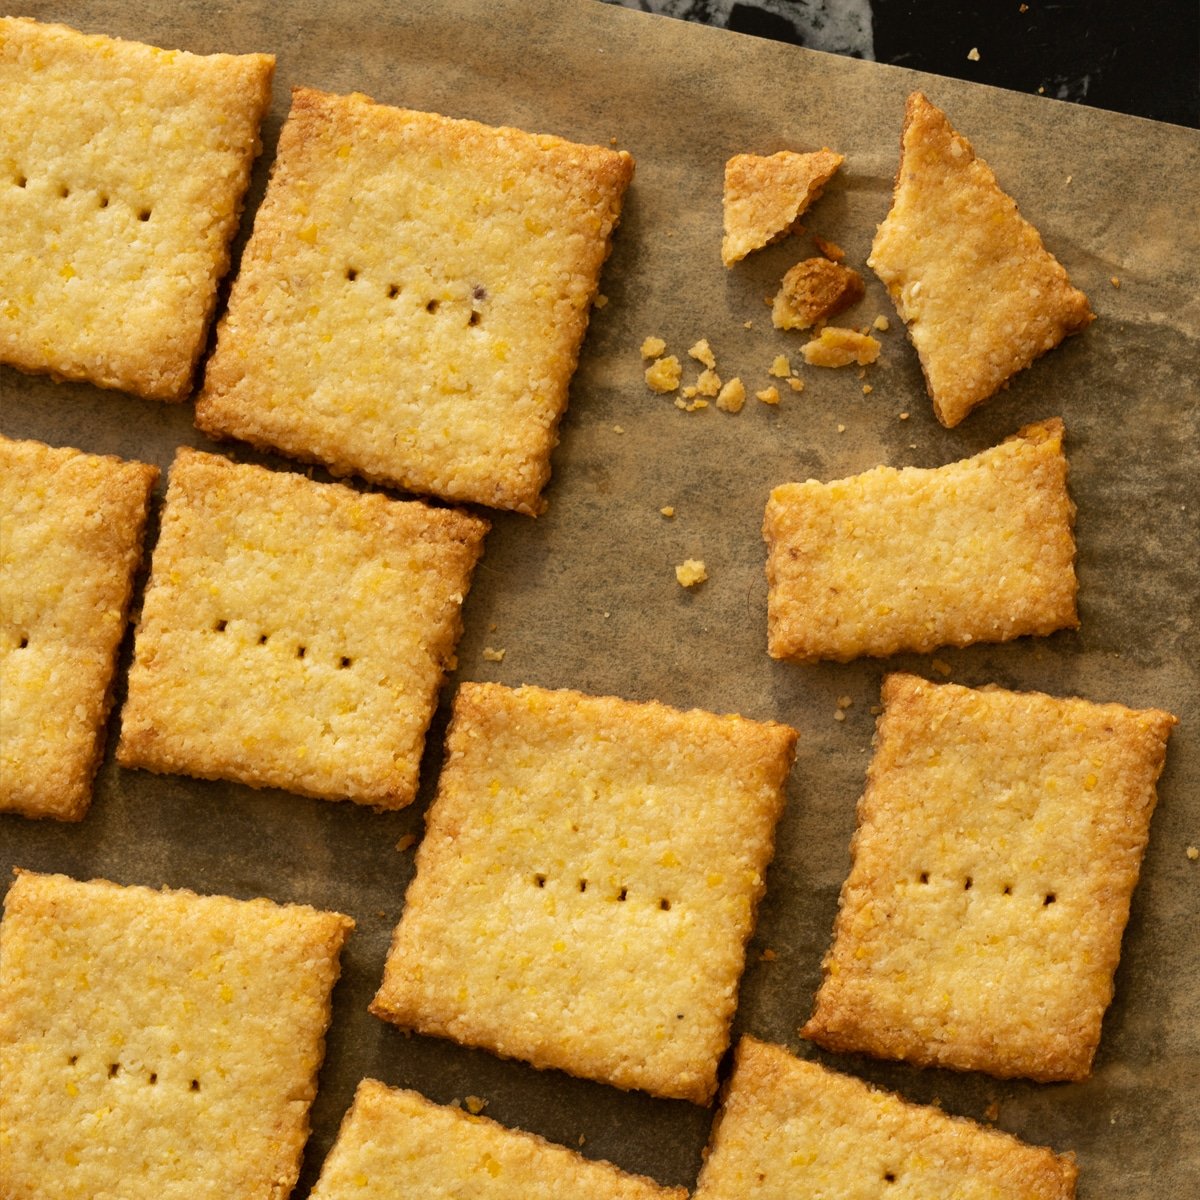 Homemade cornbread crackers made with almond flour